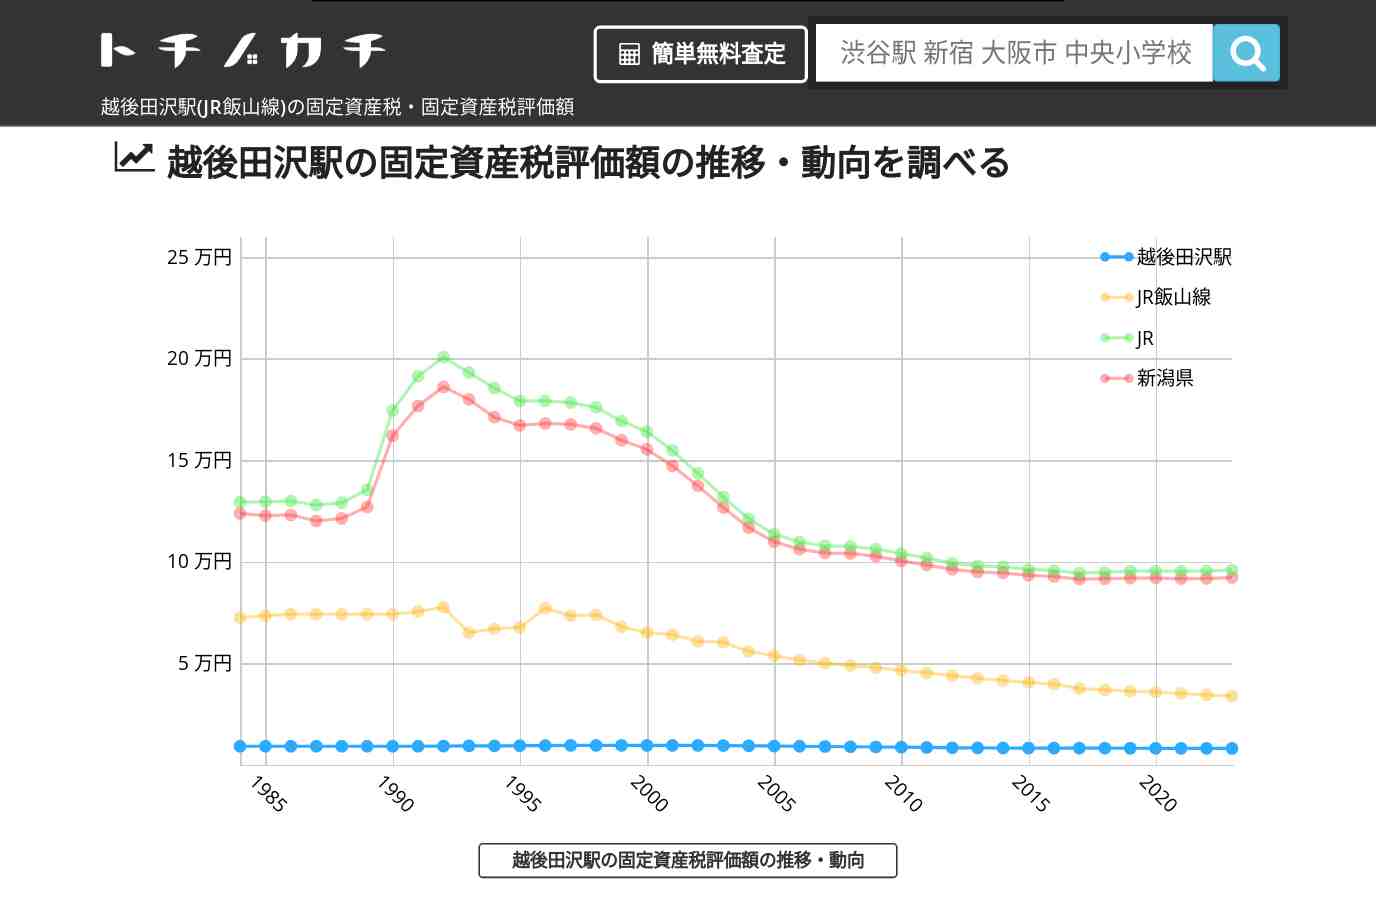 越後田沢駅(JR飯山線)の固定資産税・固定資産税評価額 | トチノカチ